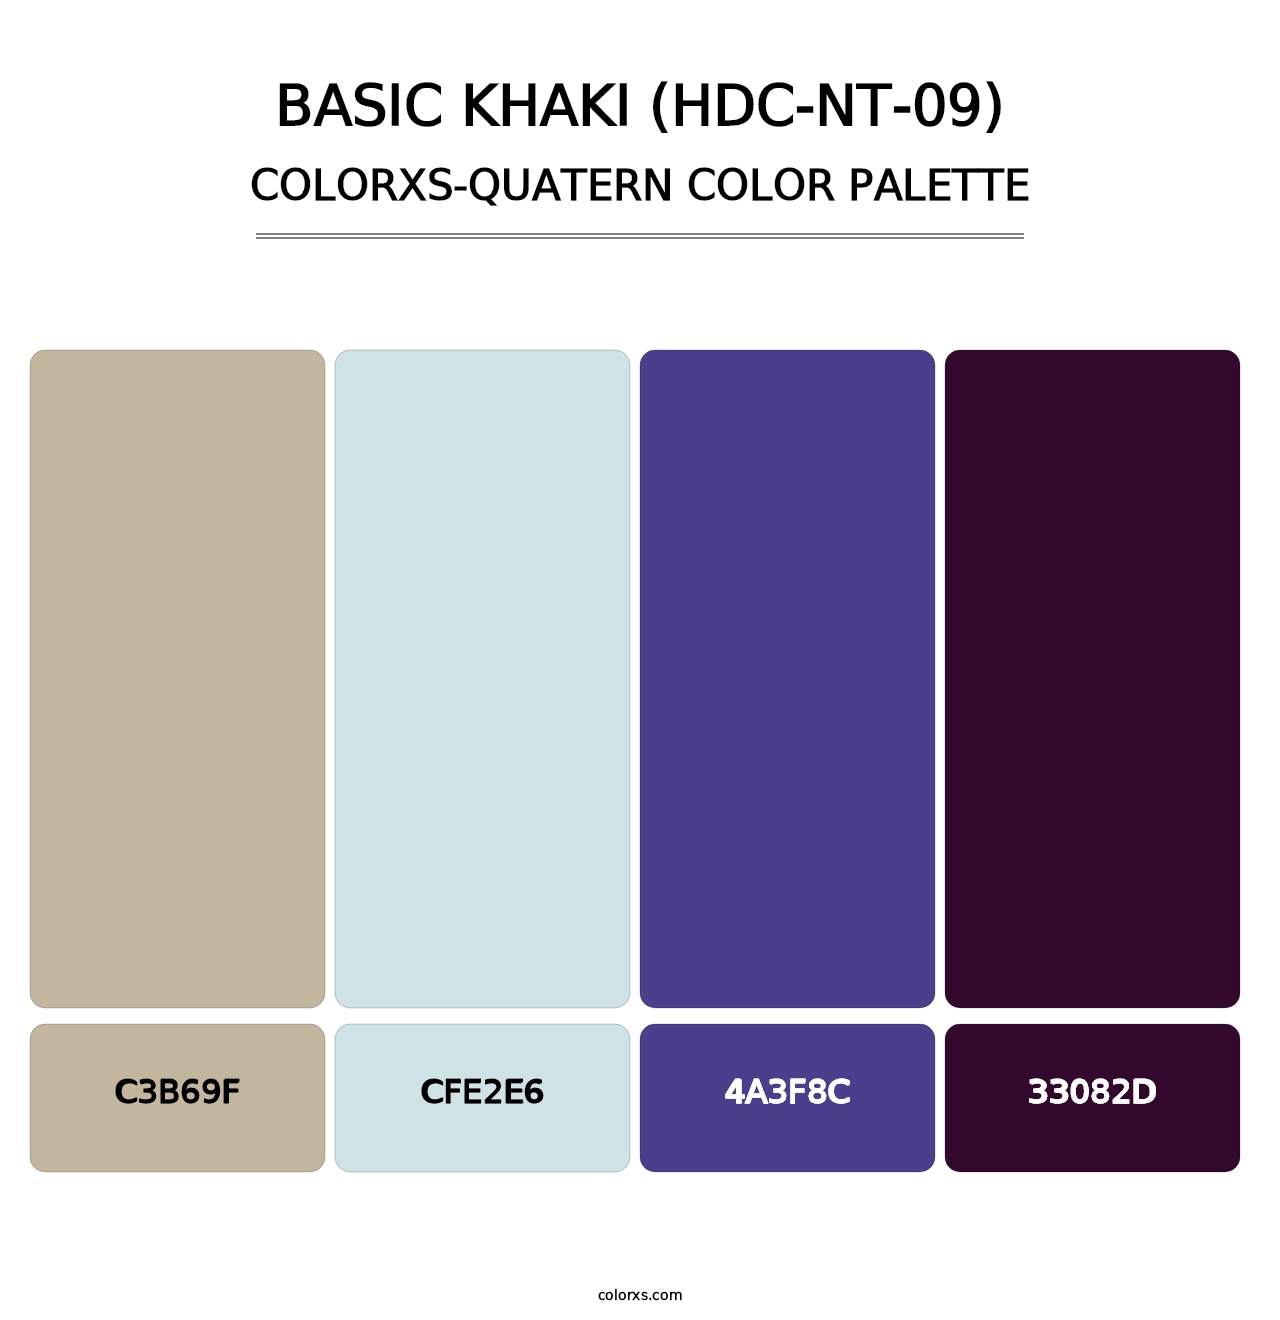 Basic Khaki (HDC-NT-09) - Colorxs Quatern Palette